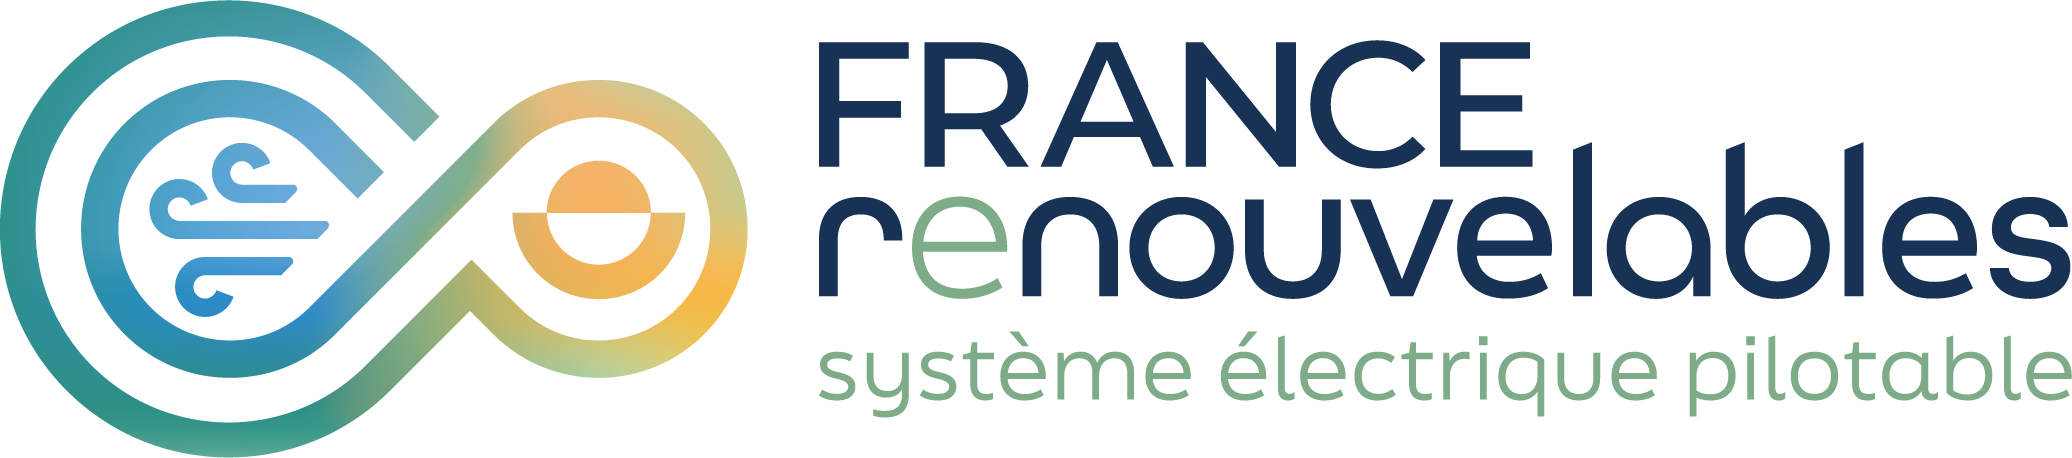 France Renouvelables logo